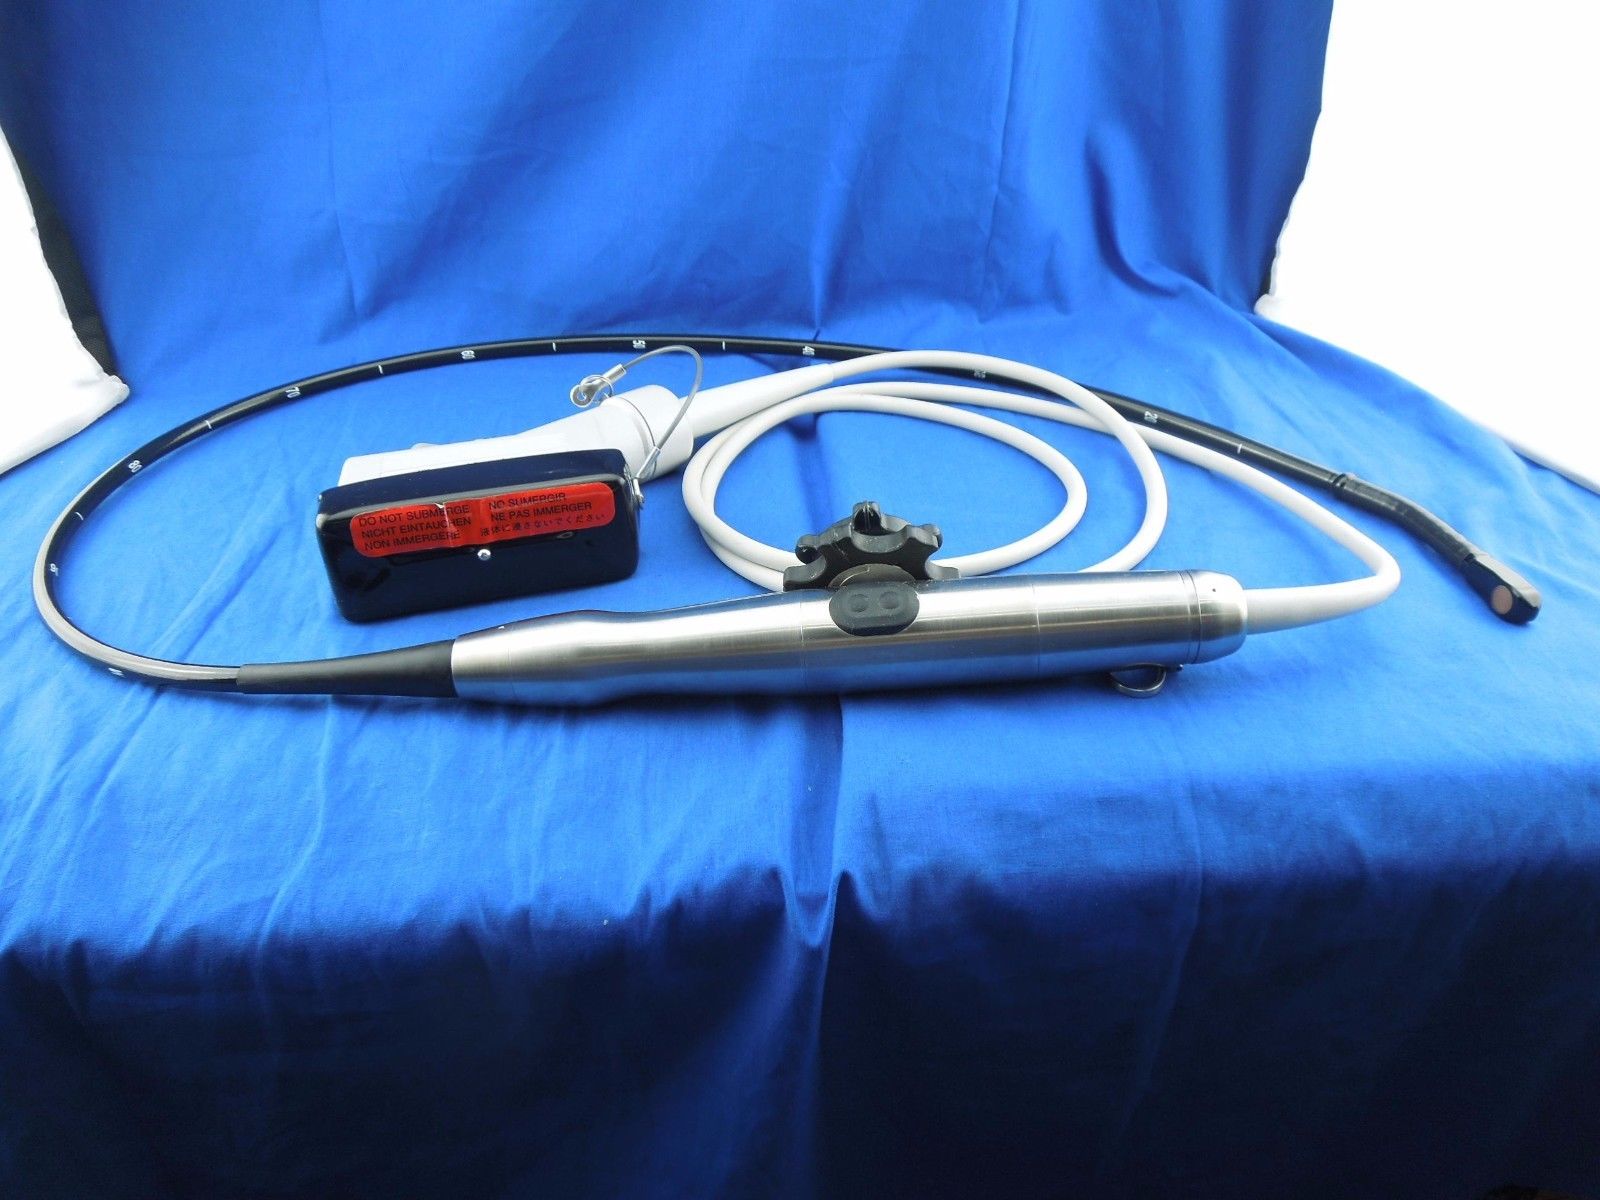 probe wrapped around blue desk